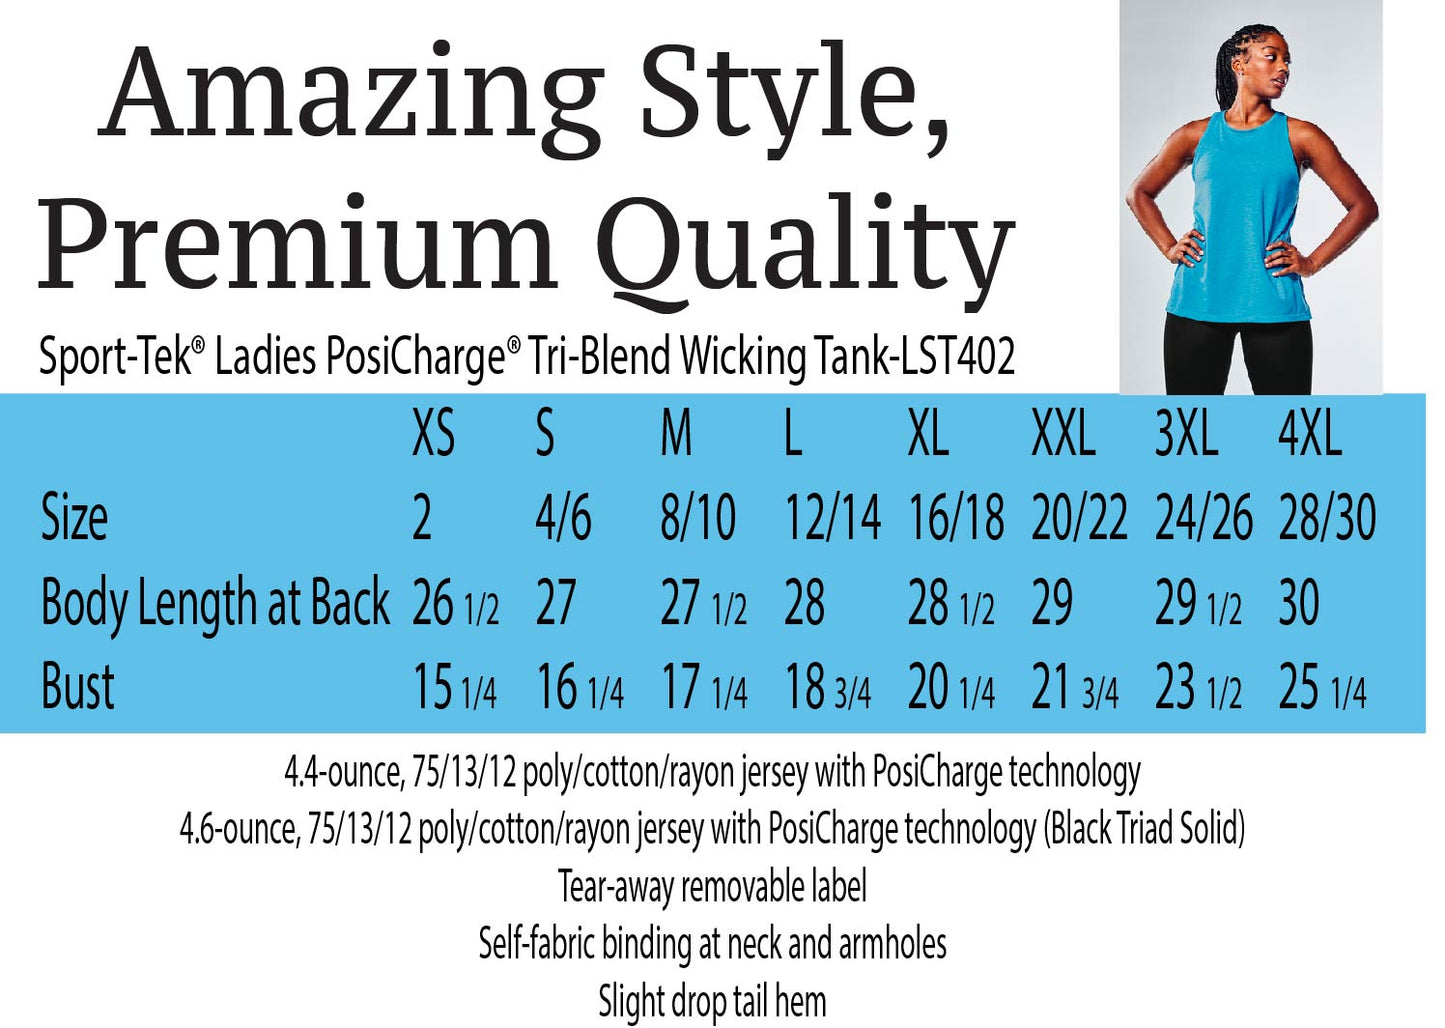 Sport-Tek Ladies PosiCharge Tri-Blend Wicking Tank, Product